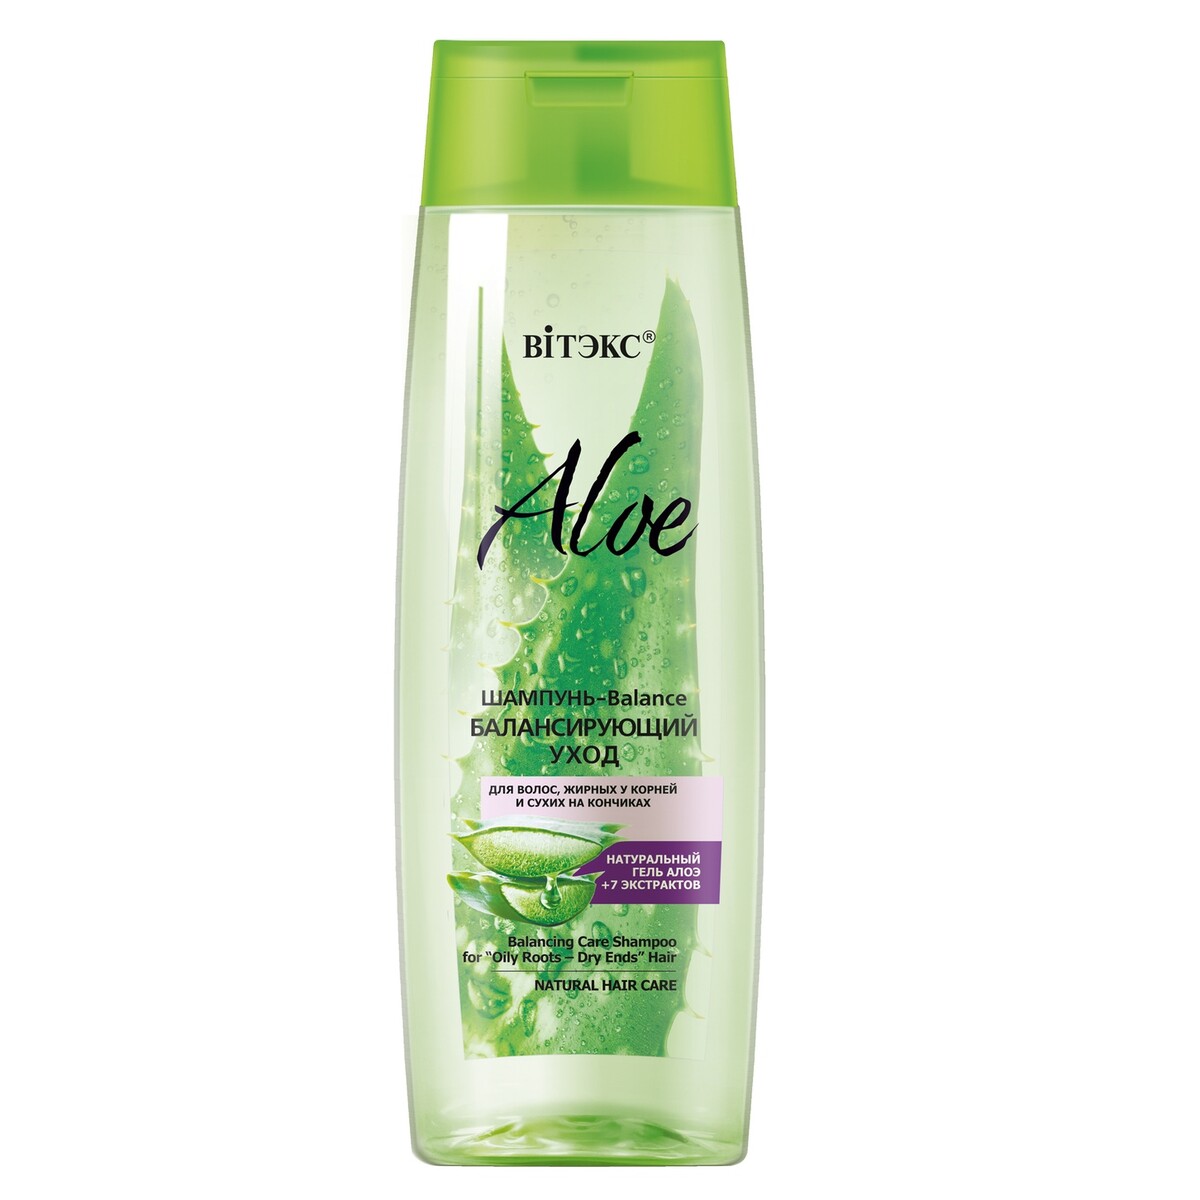 Vitex Aloe 97% ультраувлажняющий гель для душа 400мл. Витекс 500 мл.шампунь алое. Шампунь Aloe Витекс для сухих волос. Balance aloe